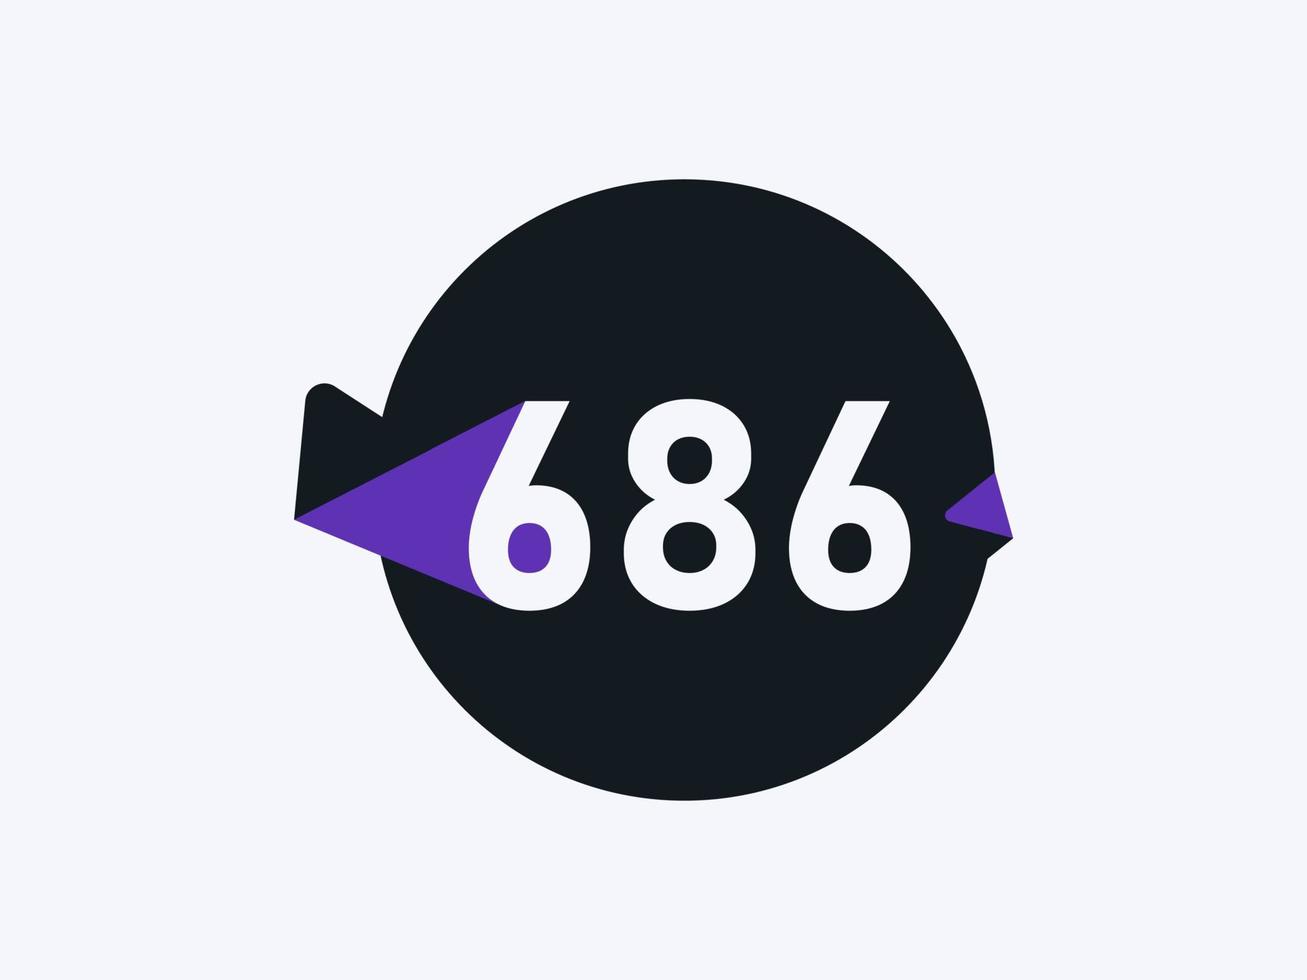 686 Number logo icon design vector image. Number logo icon design vector image